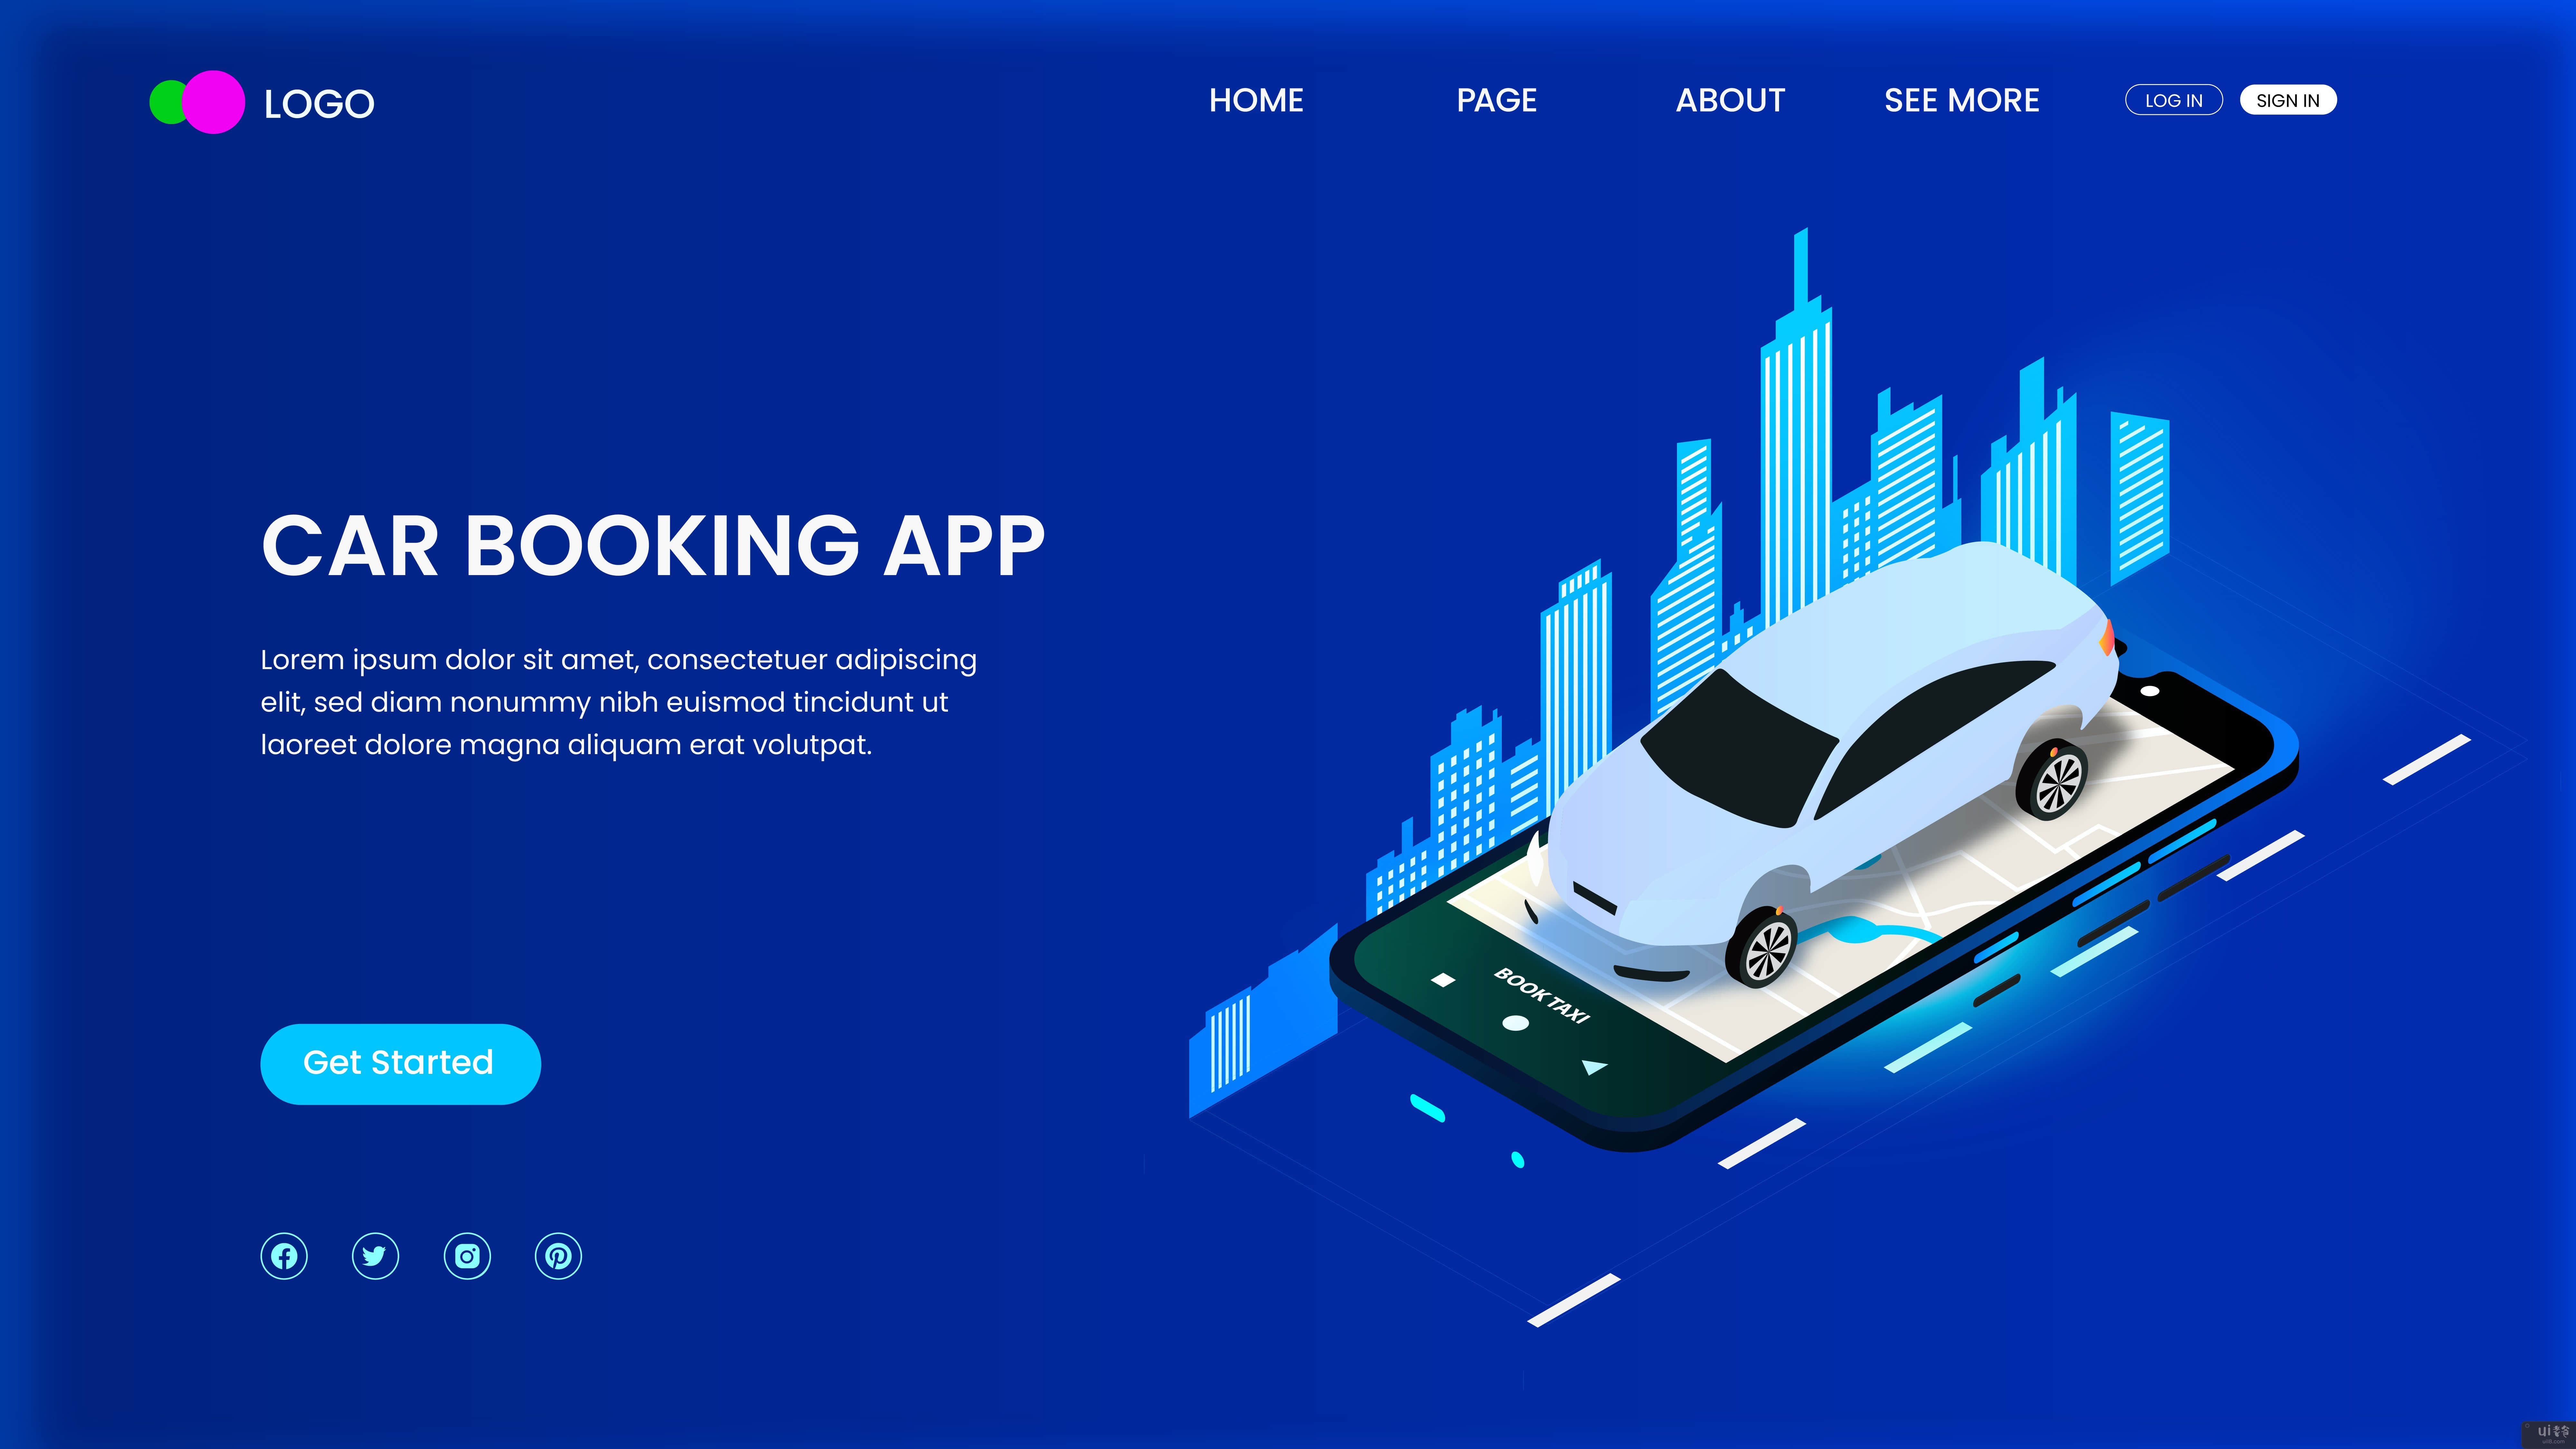 订车应用登陆页面(Car Booking App Landing Page)插图2